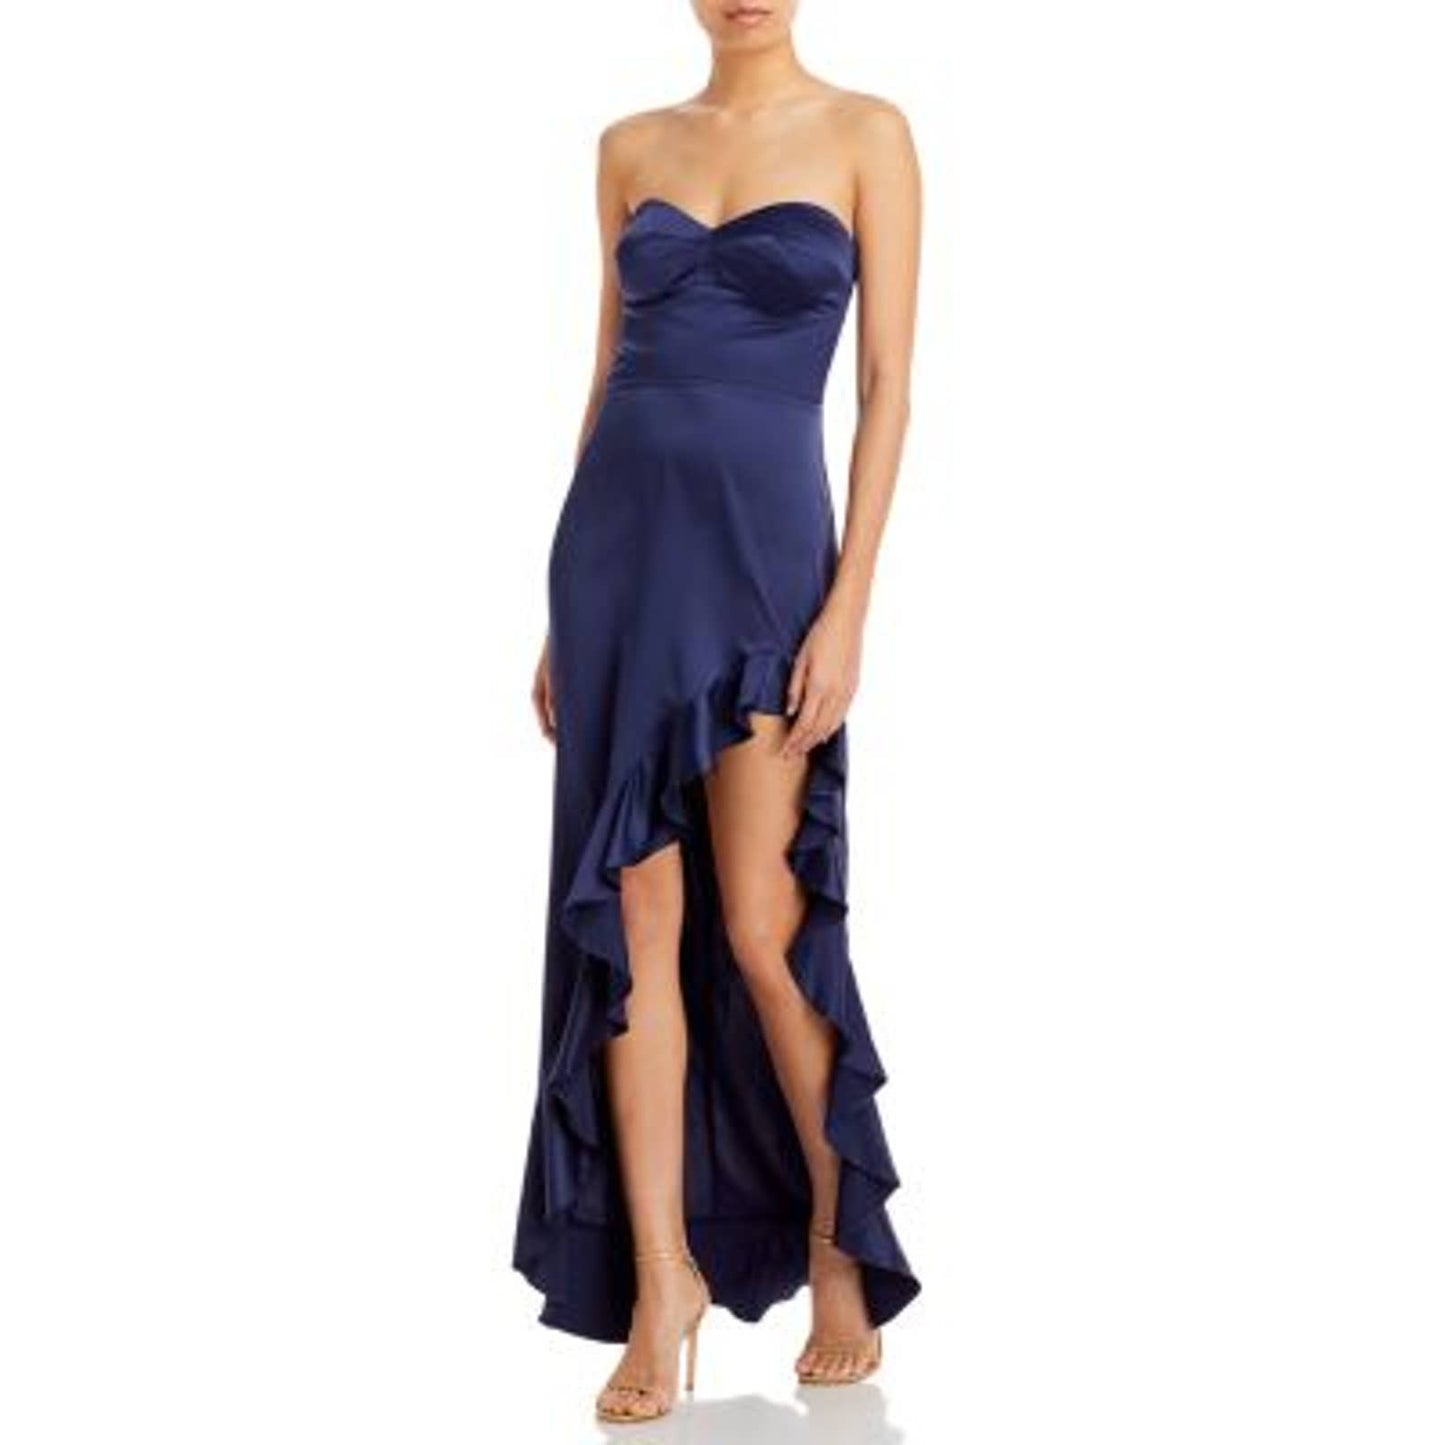 AQUA Ladies Navy Blue Strapless Ruffle Maxi Dress, High Slit in Leg, M, NWT!